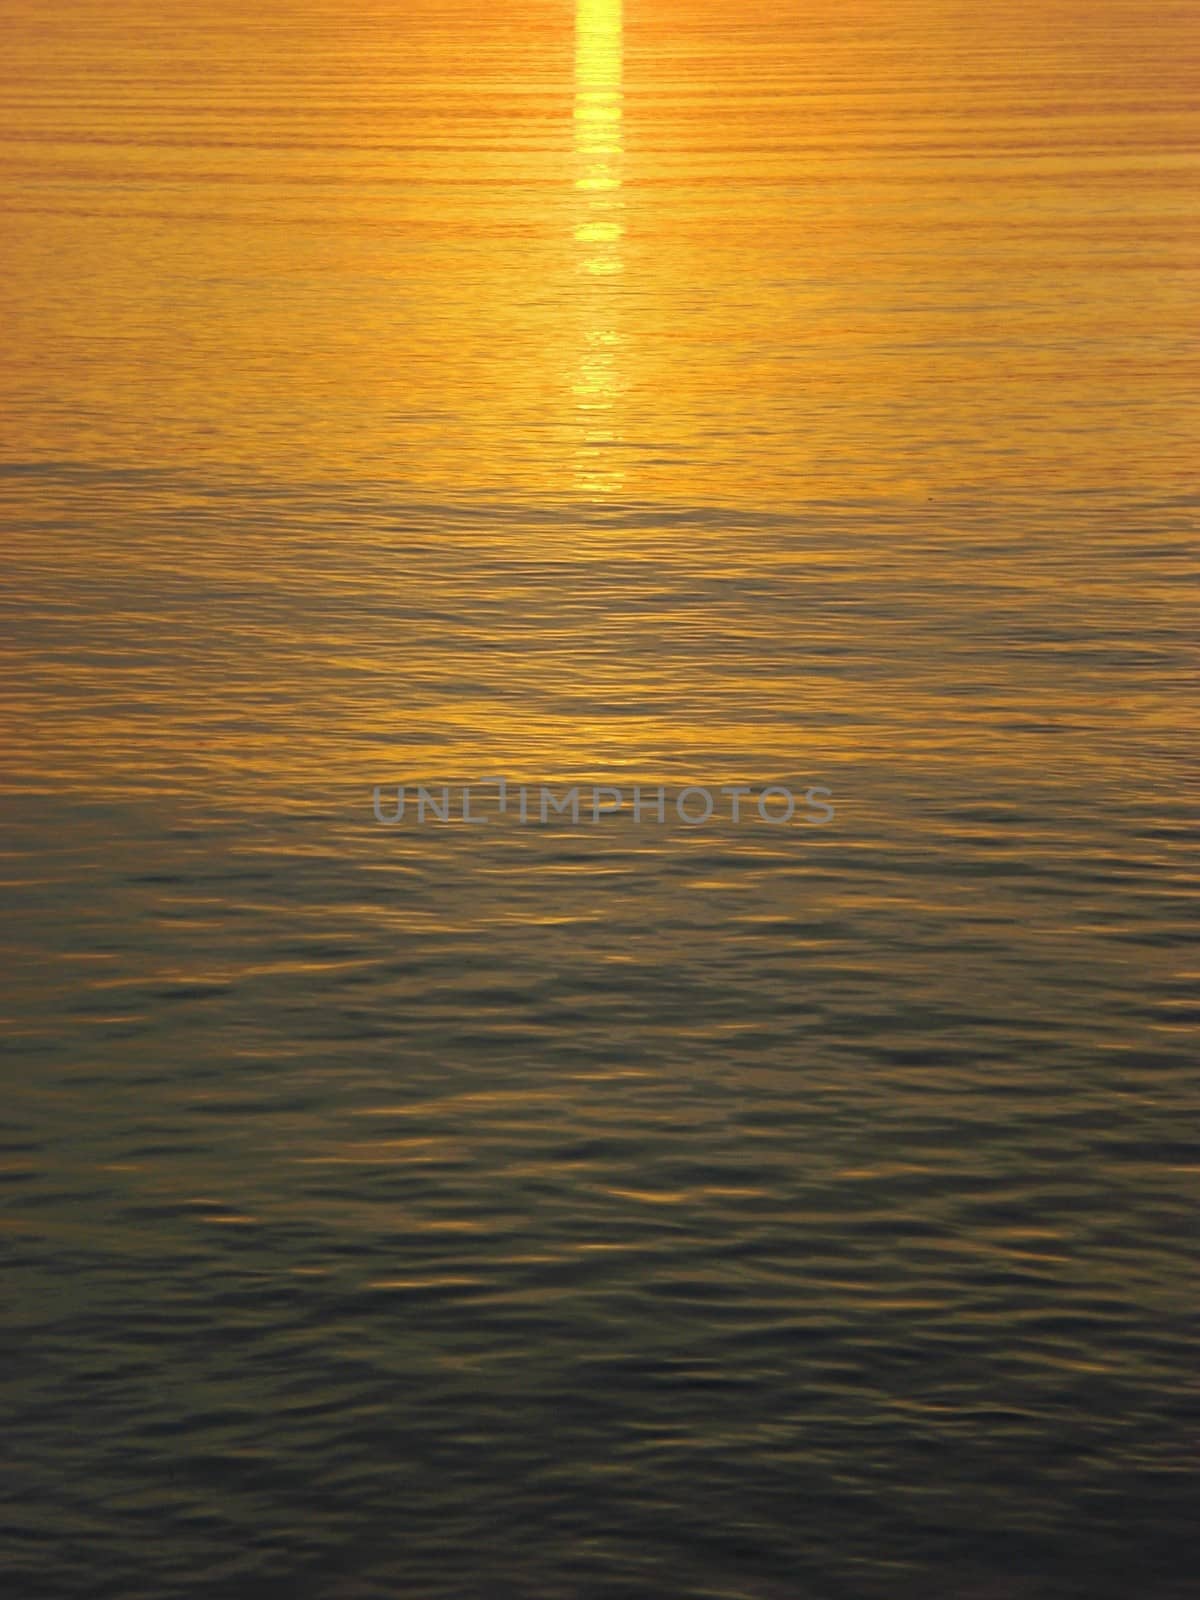 Sun Reflection in Sea Background  by fstockluk